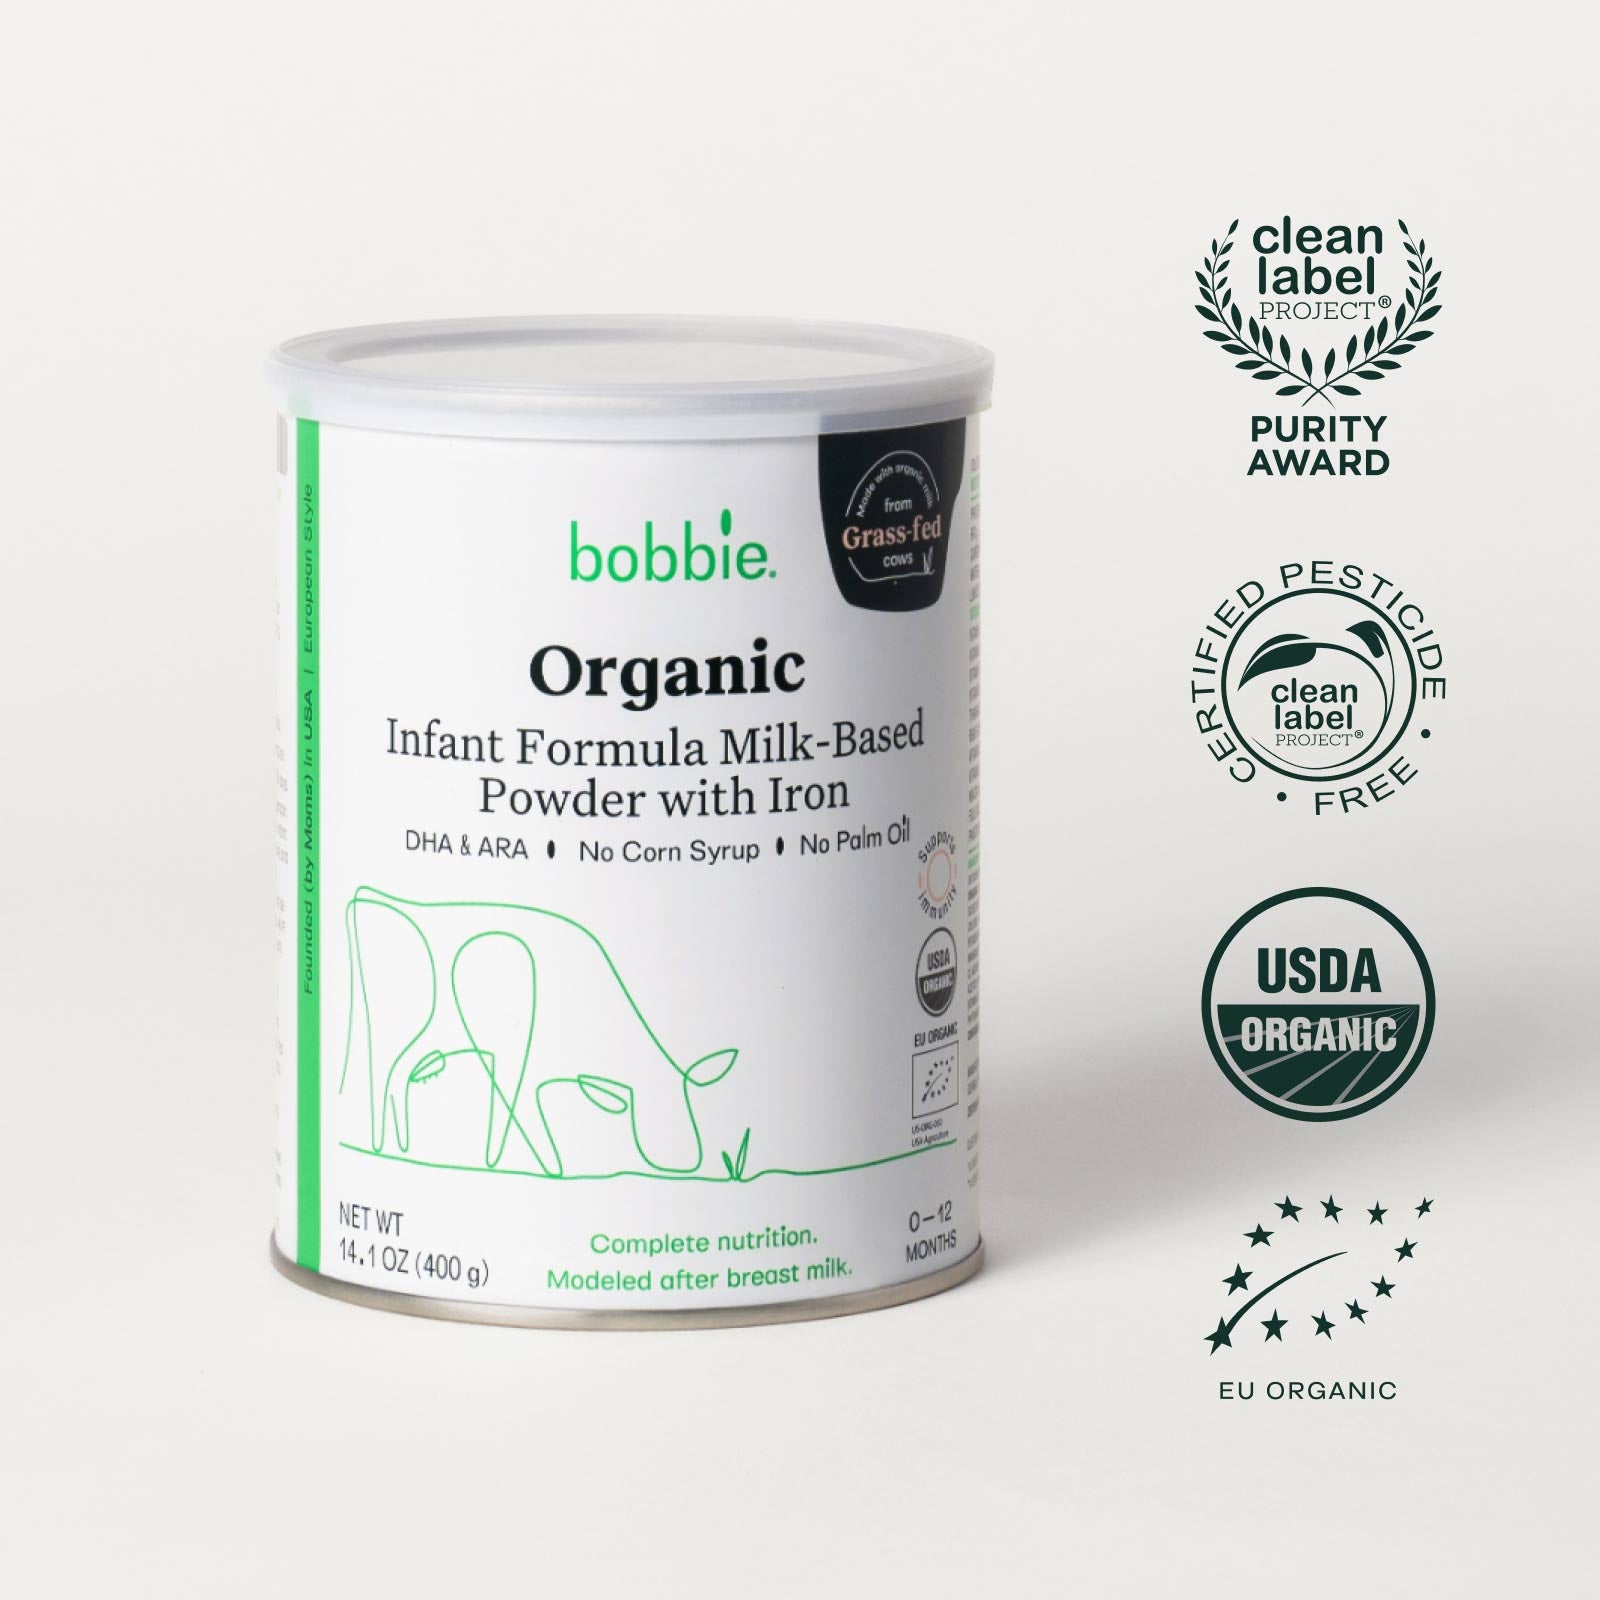 Bobbie Organic Infant Formula - RO